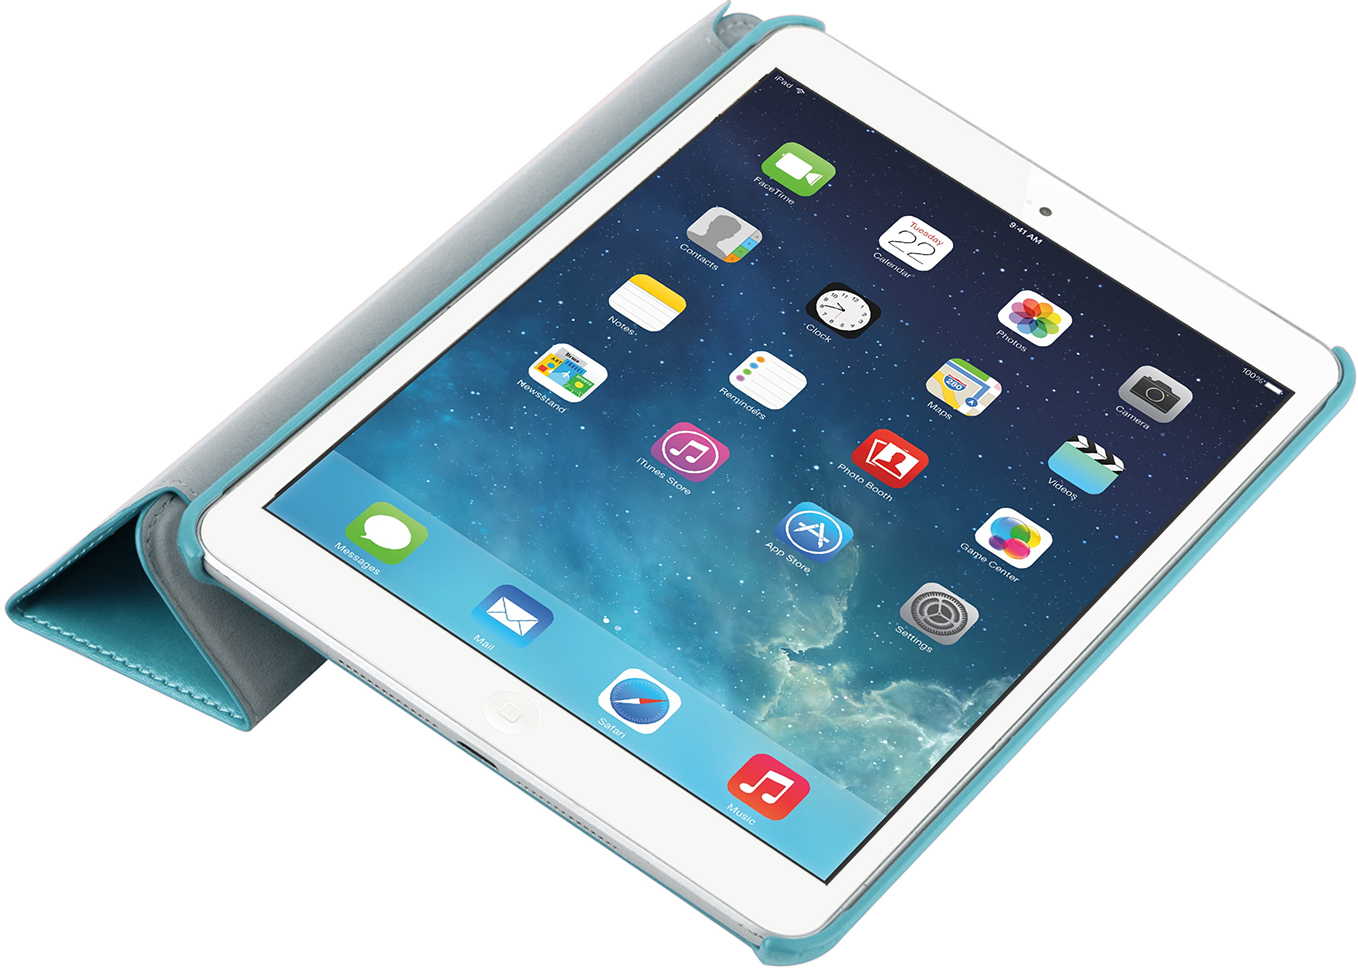  G-Case Slim Premium для iPad iPad mini 3 Blue